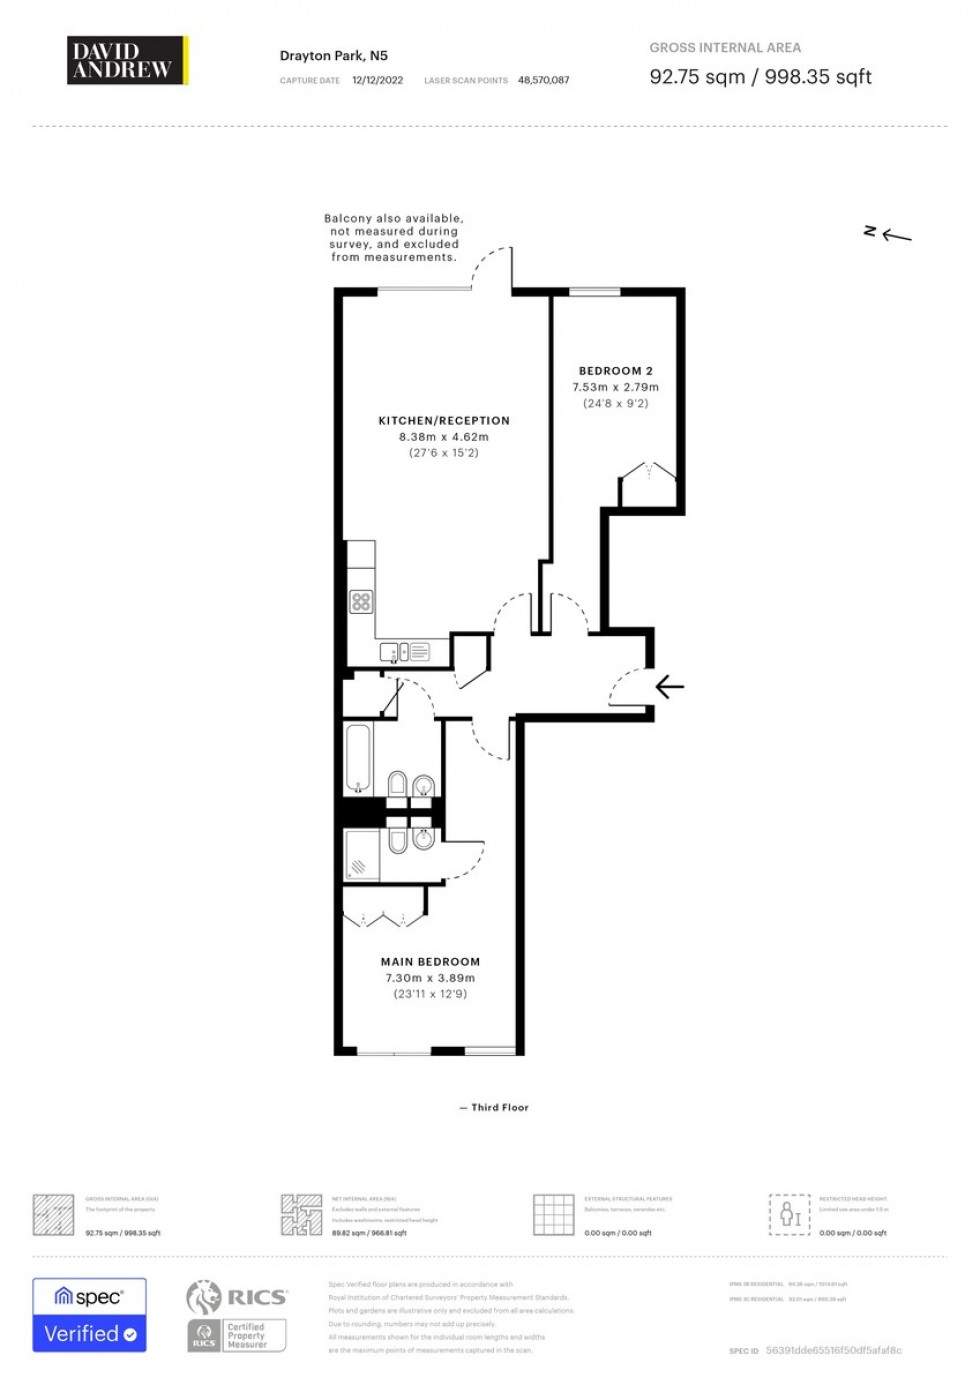 Floorplan for 71 Drayton Park, N5 1BF